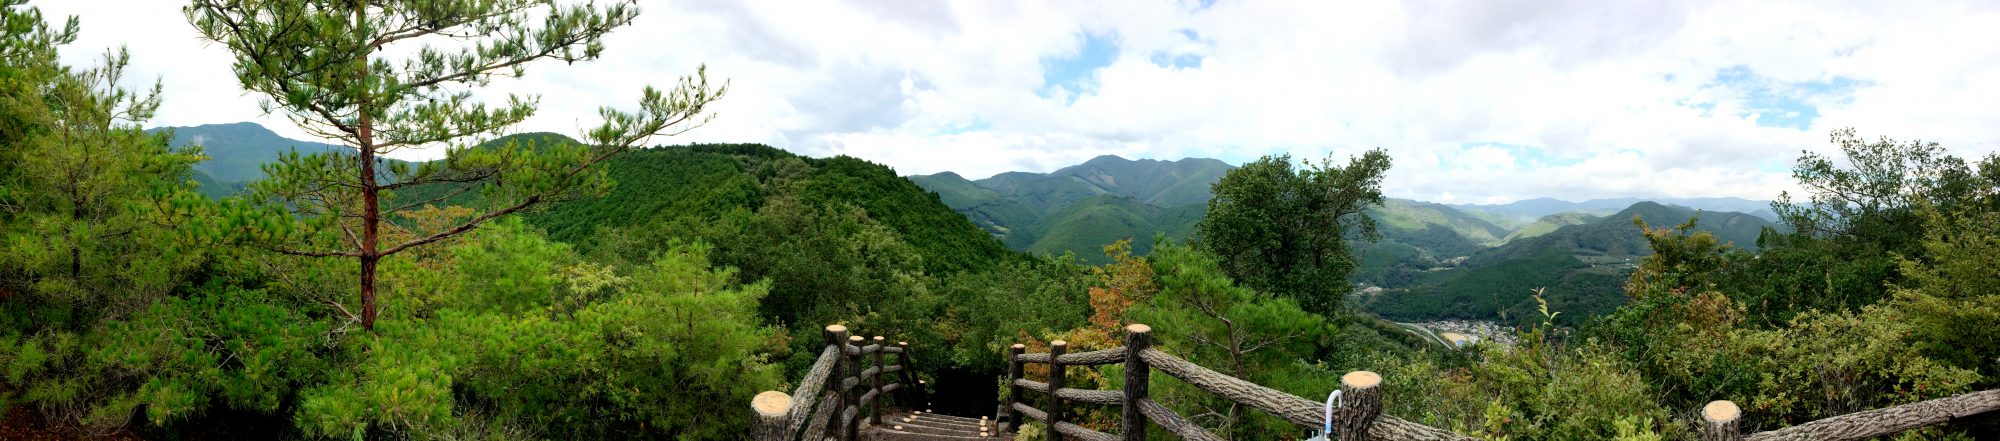 Trails over the Mountain tops in Wakayama © CoupleofMen.com